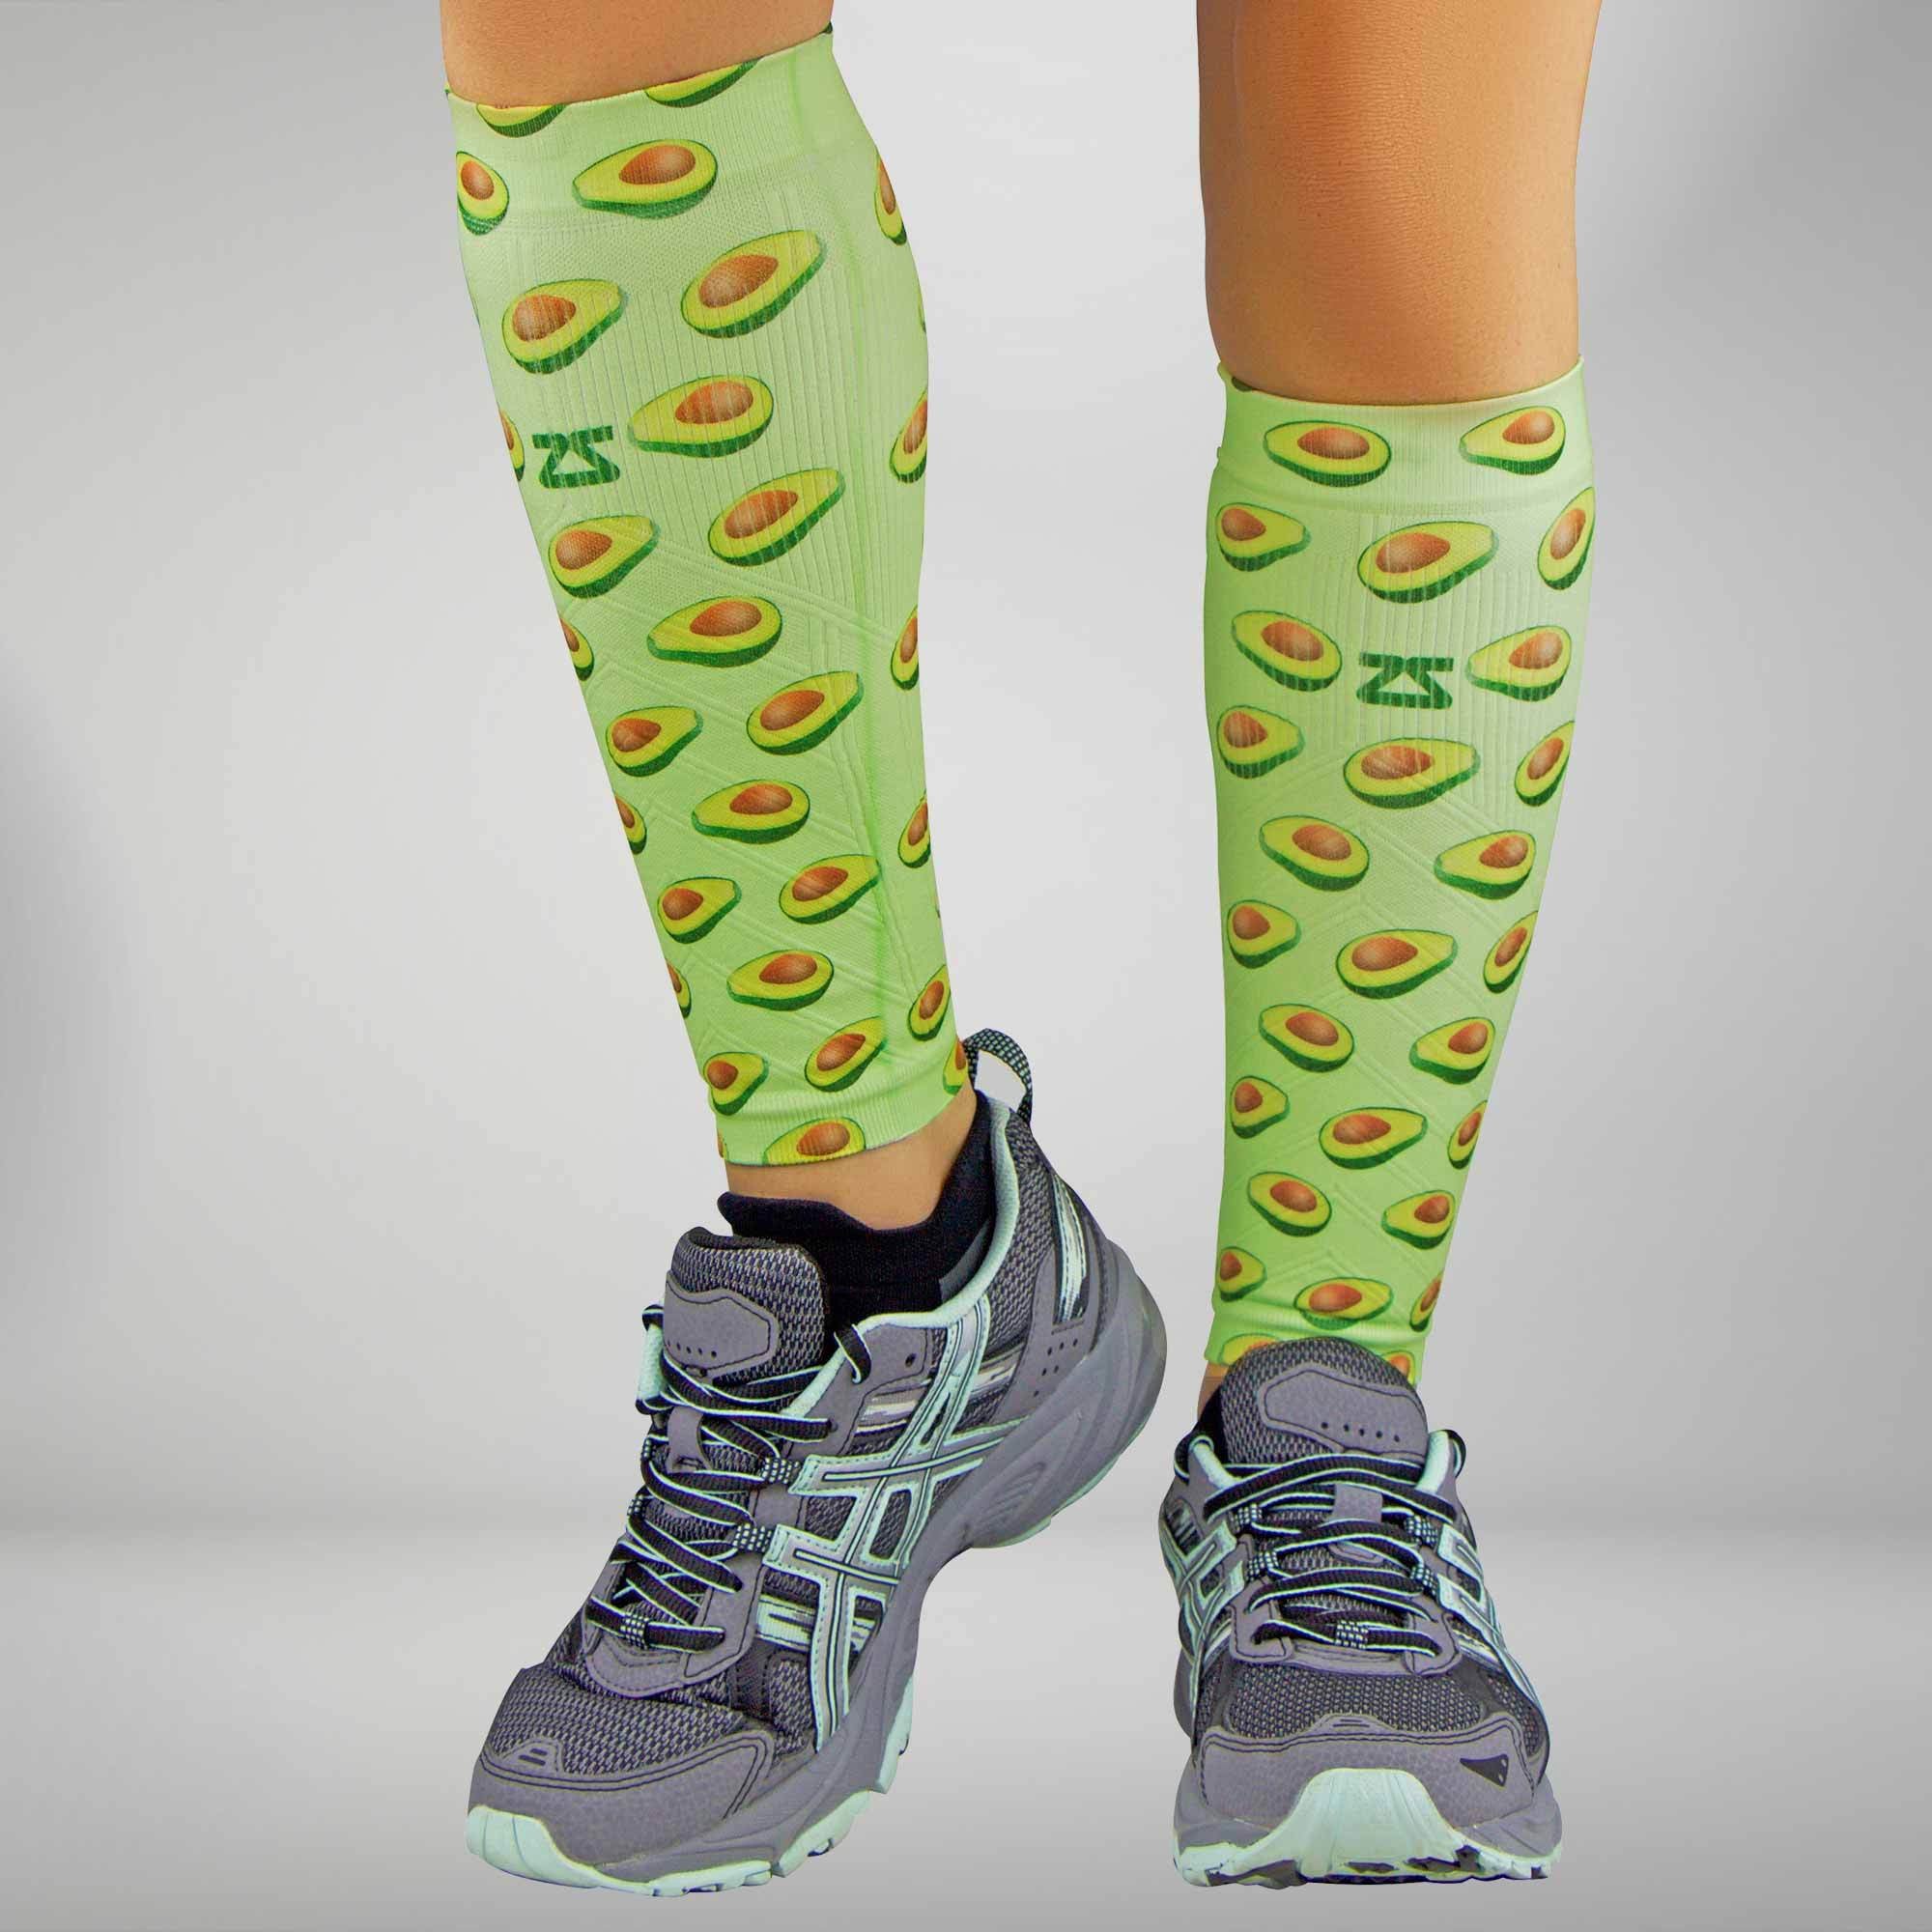 ZENSAH Fresh Legs - Athletic Compression Support Socks (Knee High